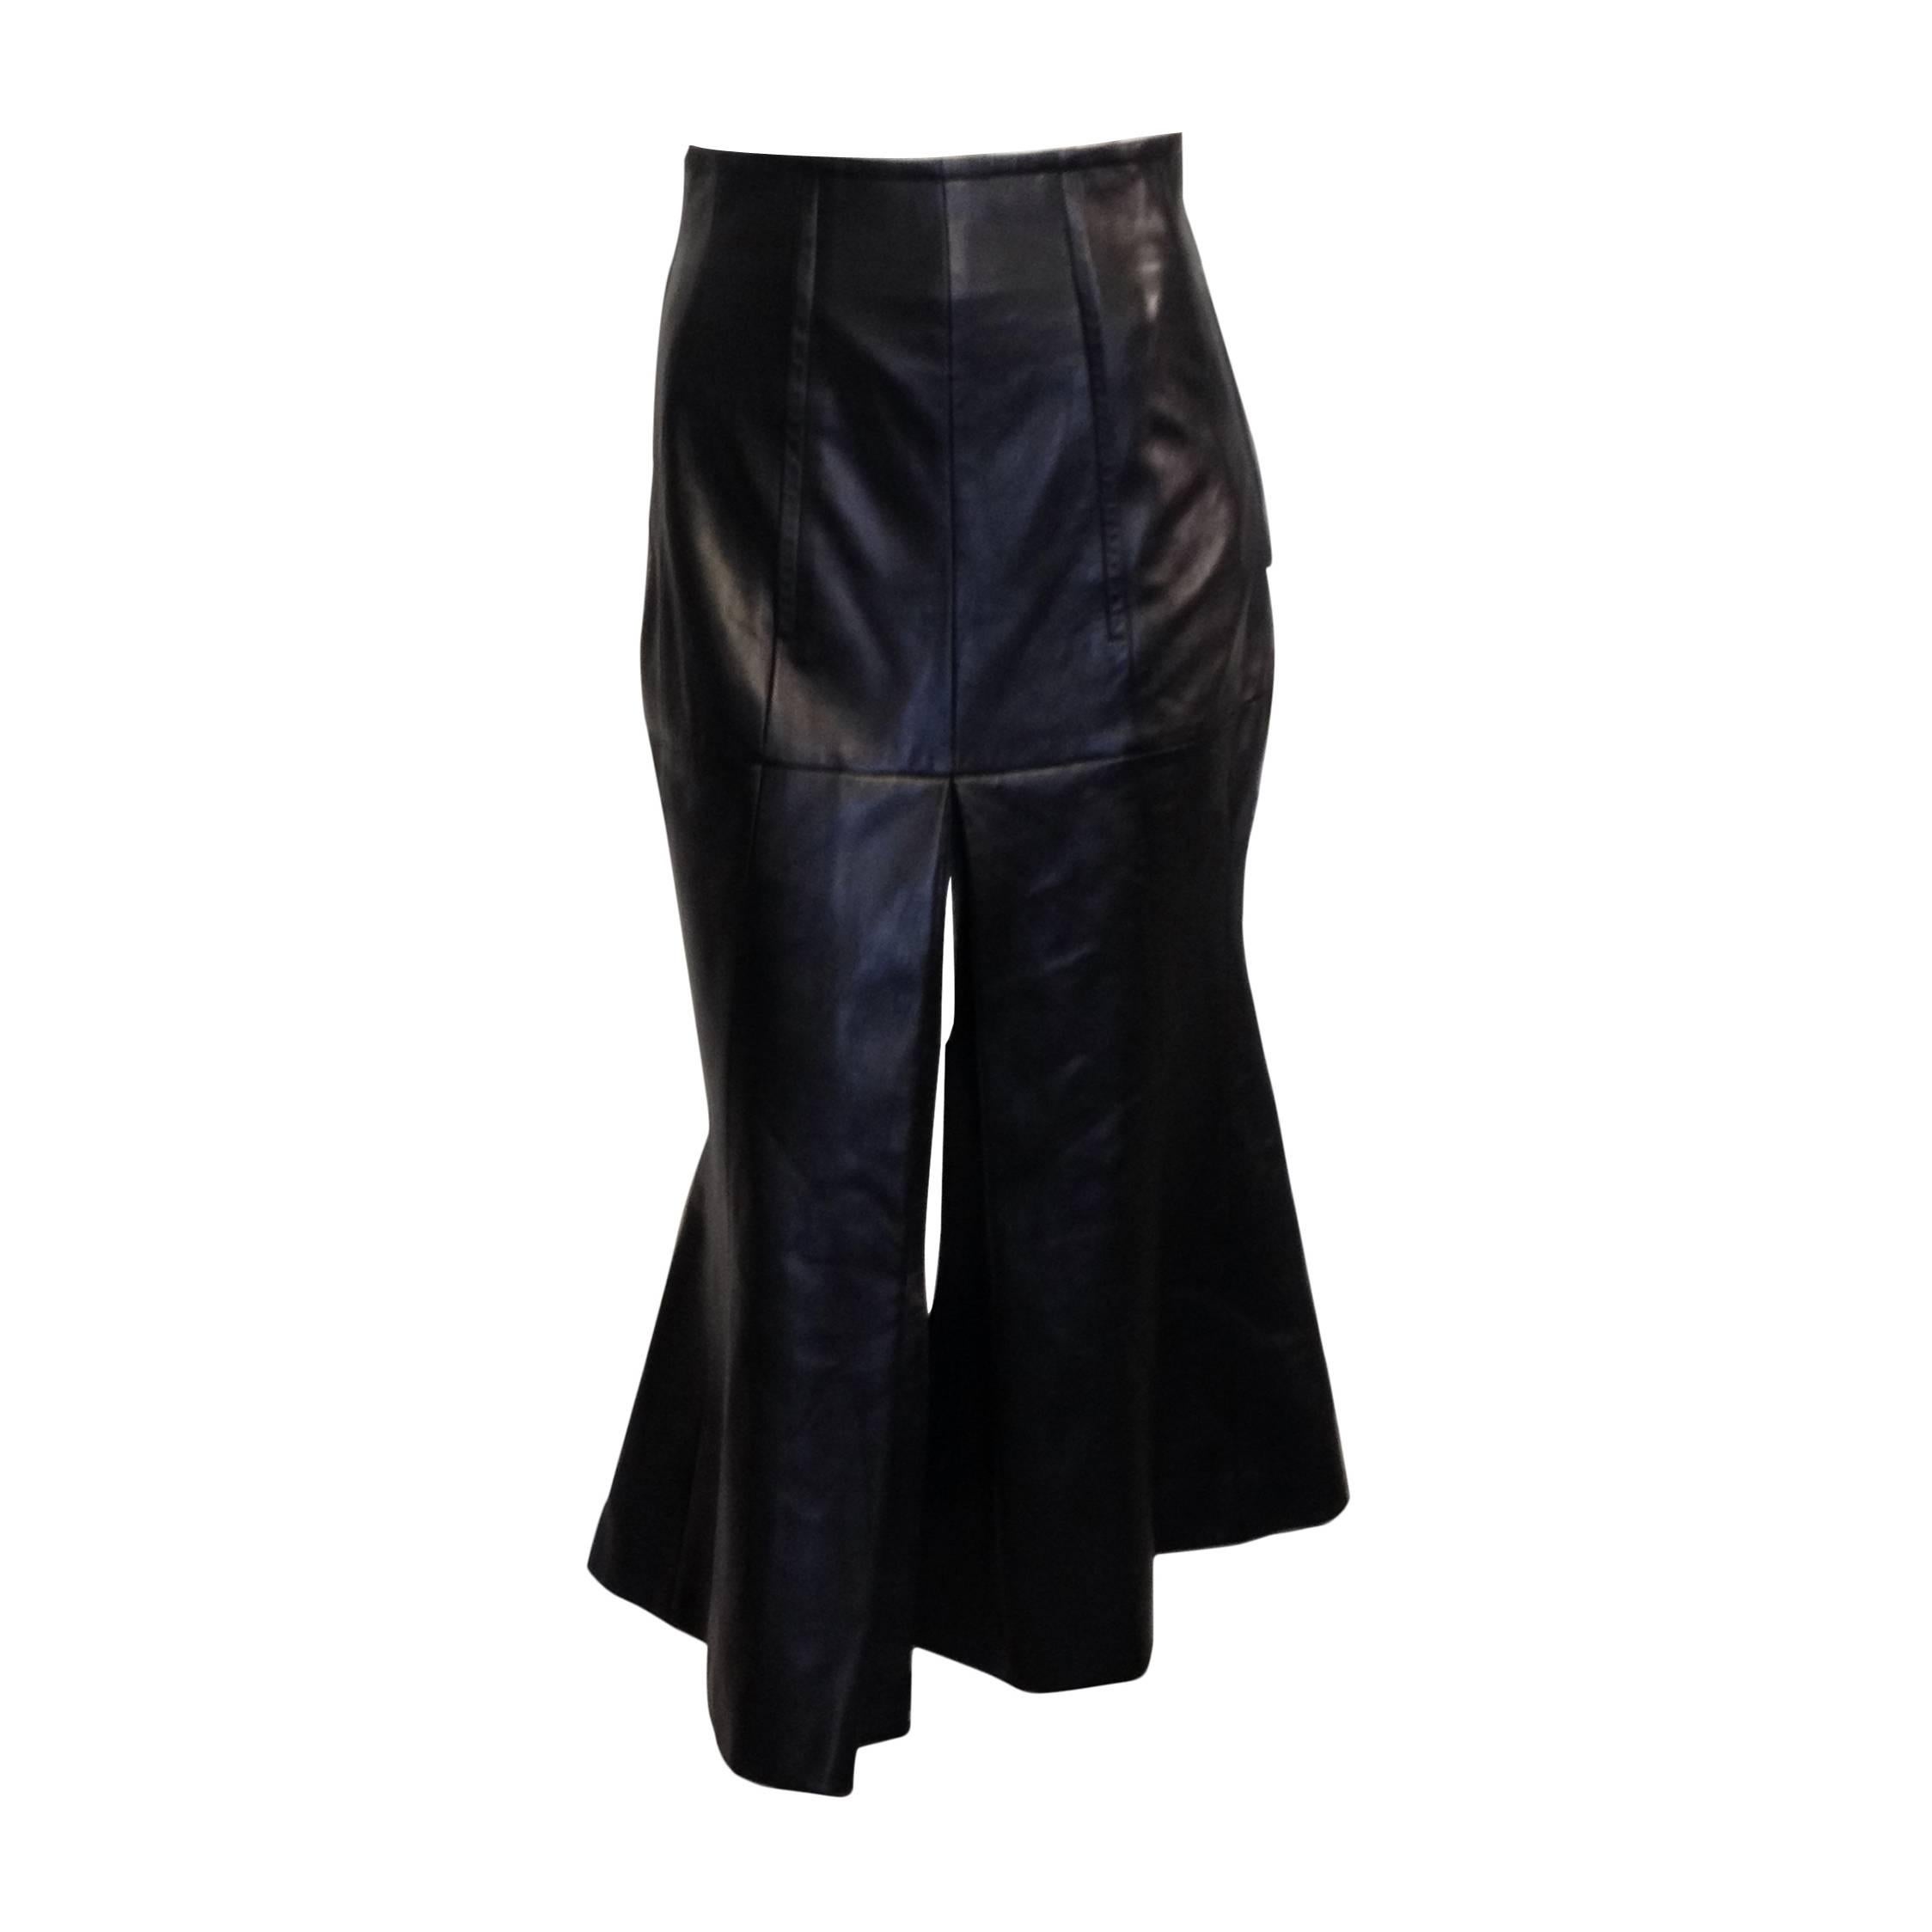 Christian Dior Black Leather Skirt